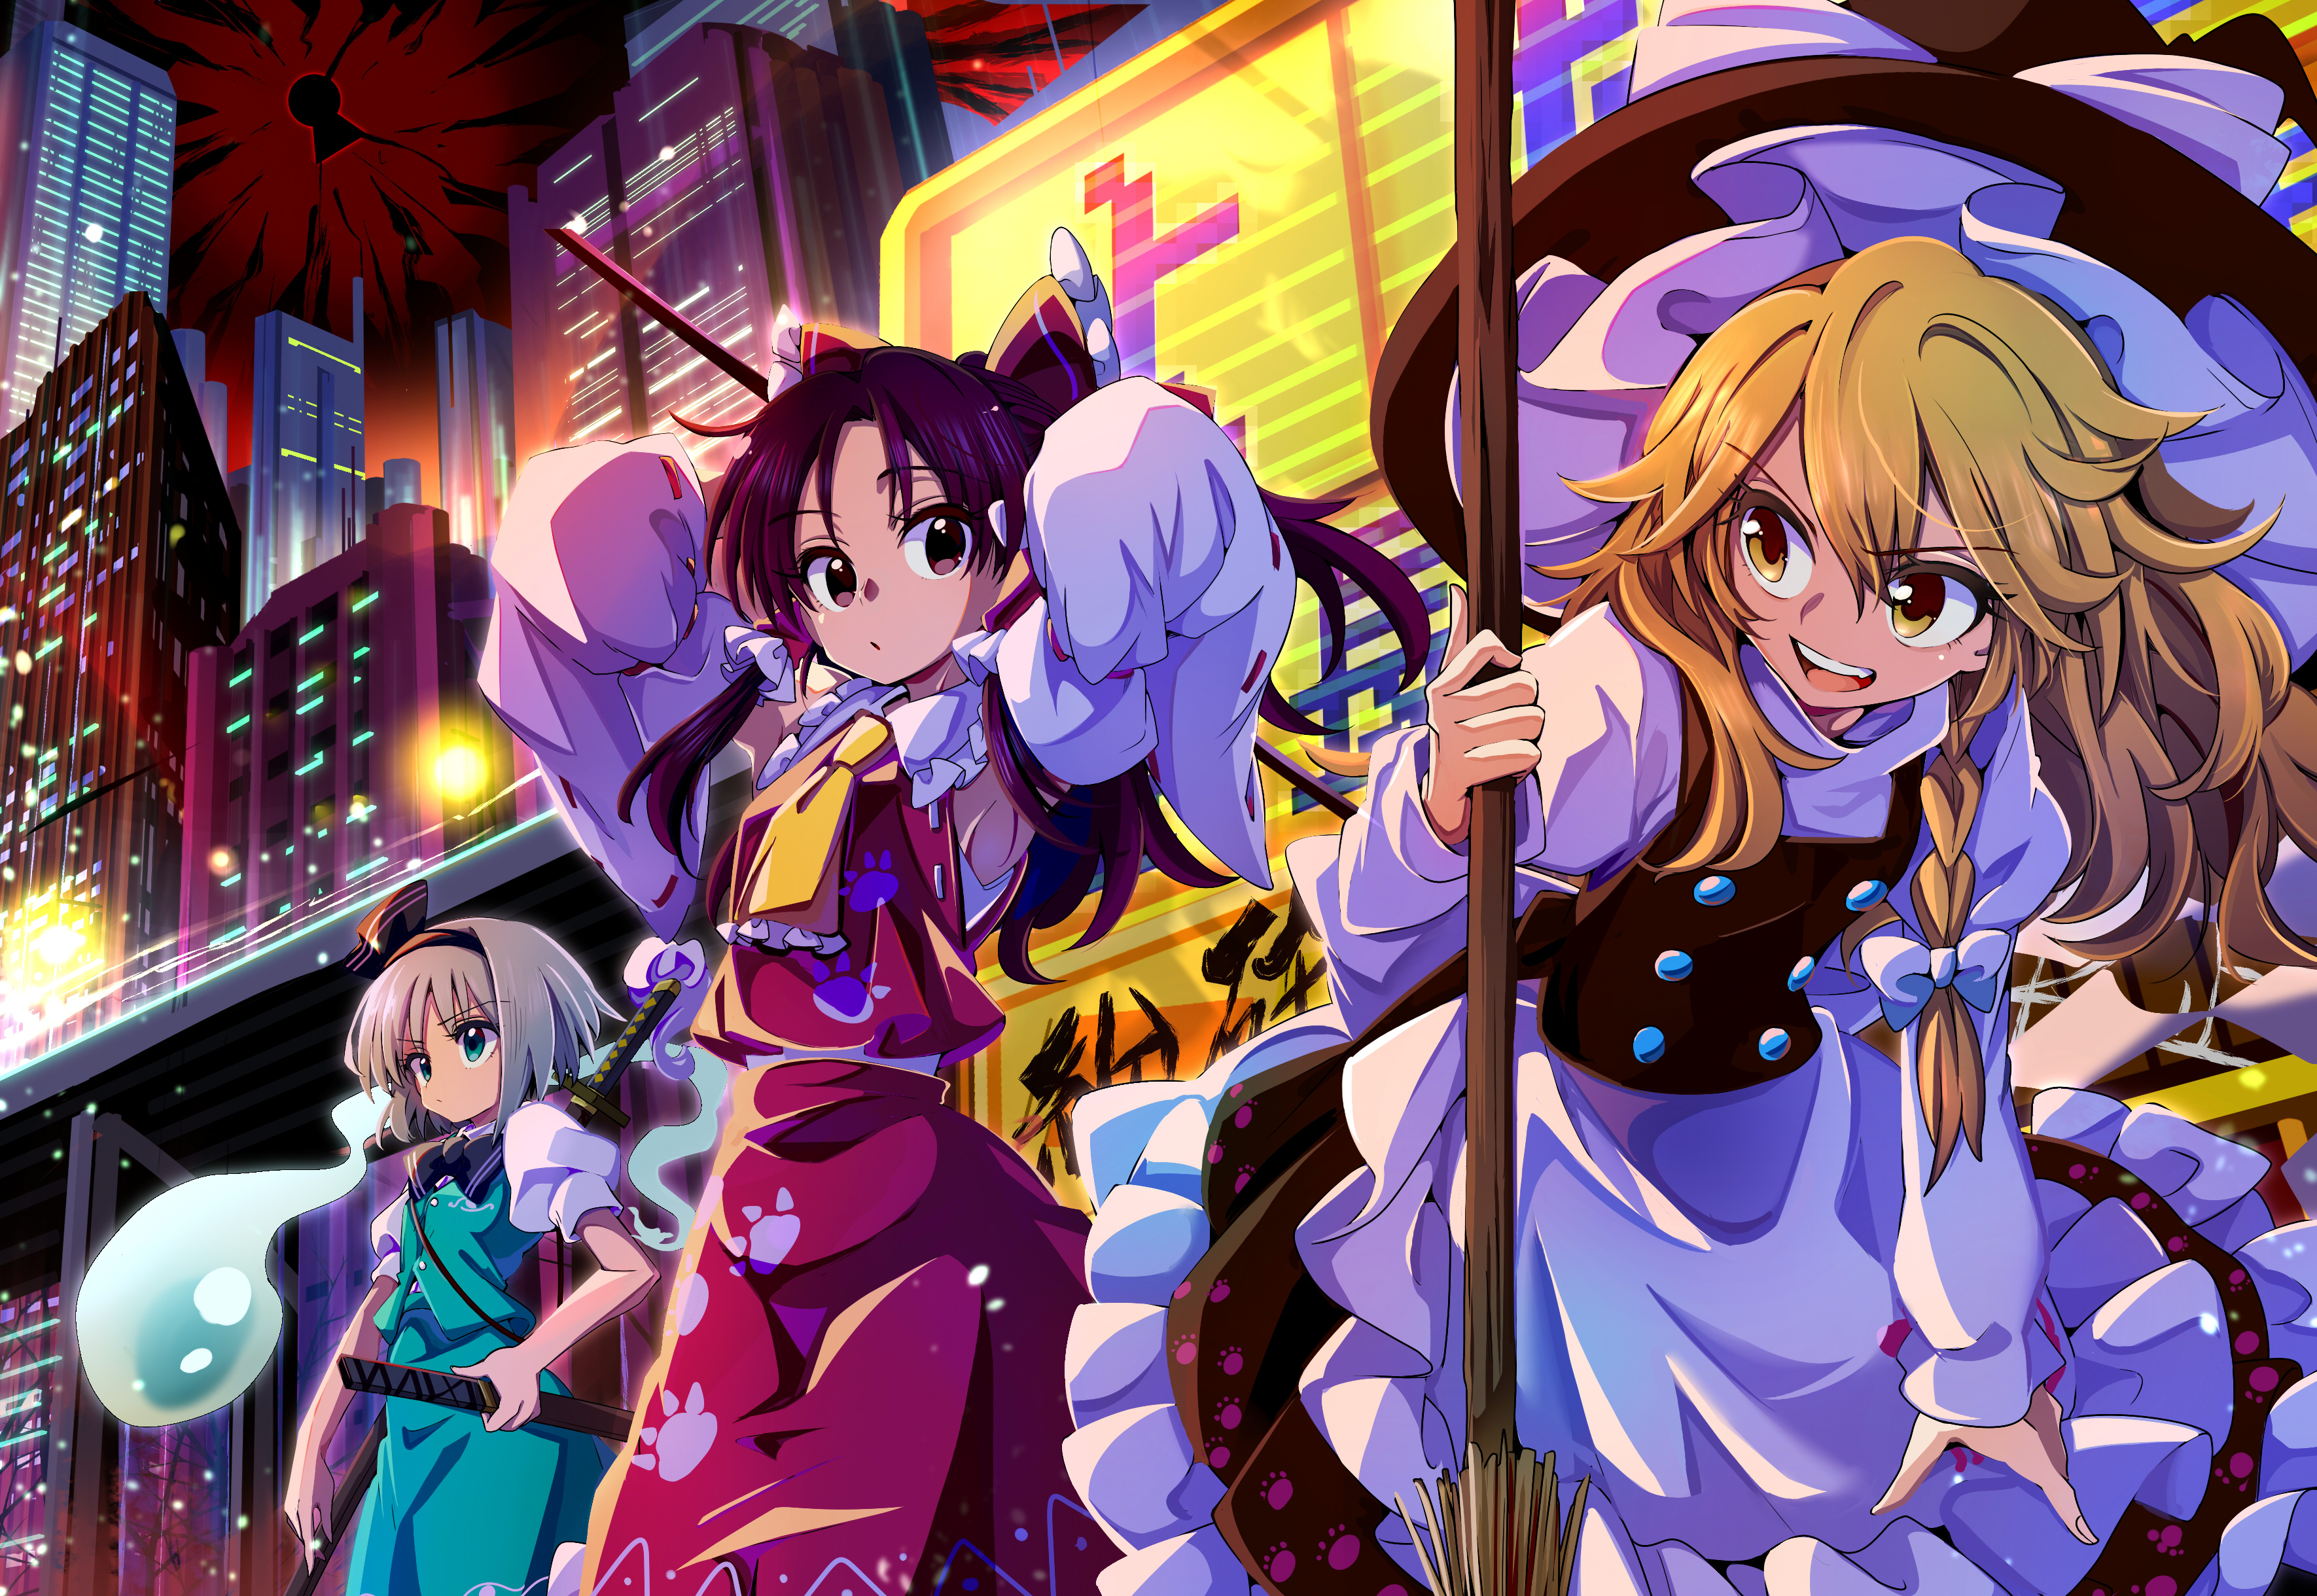 Baixe gratuitamente a imagem Anime, Touhou, Youmu Konpaku, Reimu Hakurei, Marisa Kirisame, Myon (Touhou) na área de trabalho do seu PC